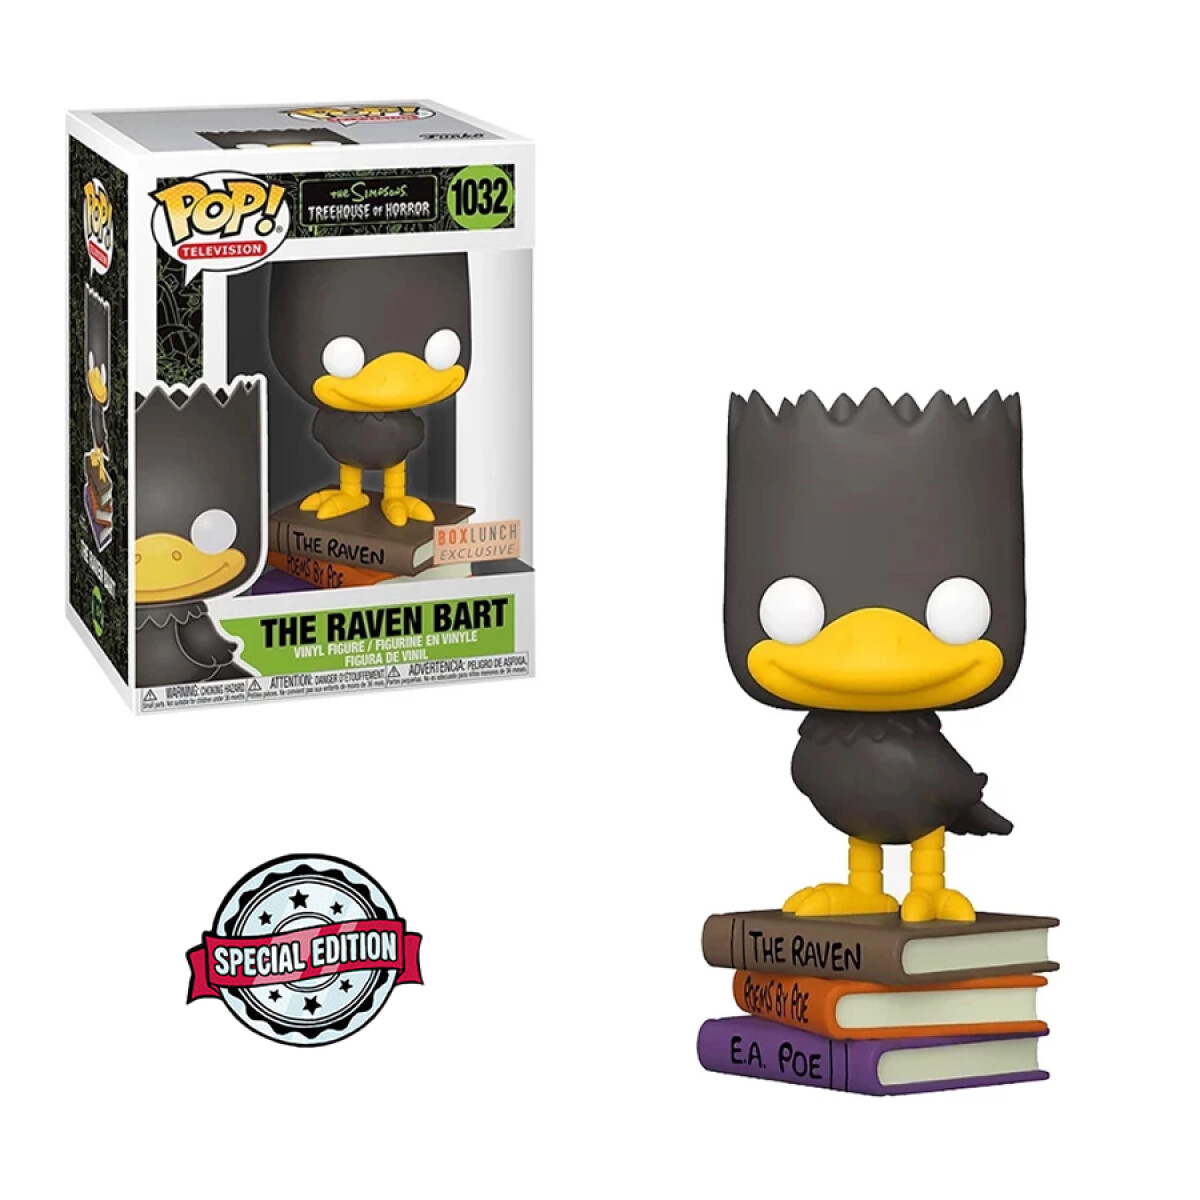 Bart as Raven Los Simpsons - 1032 [Exclusivo] 